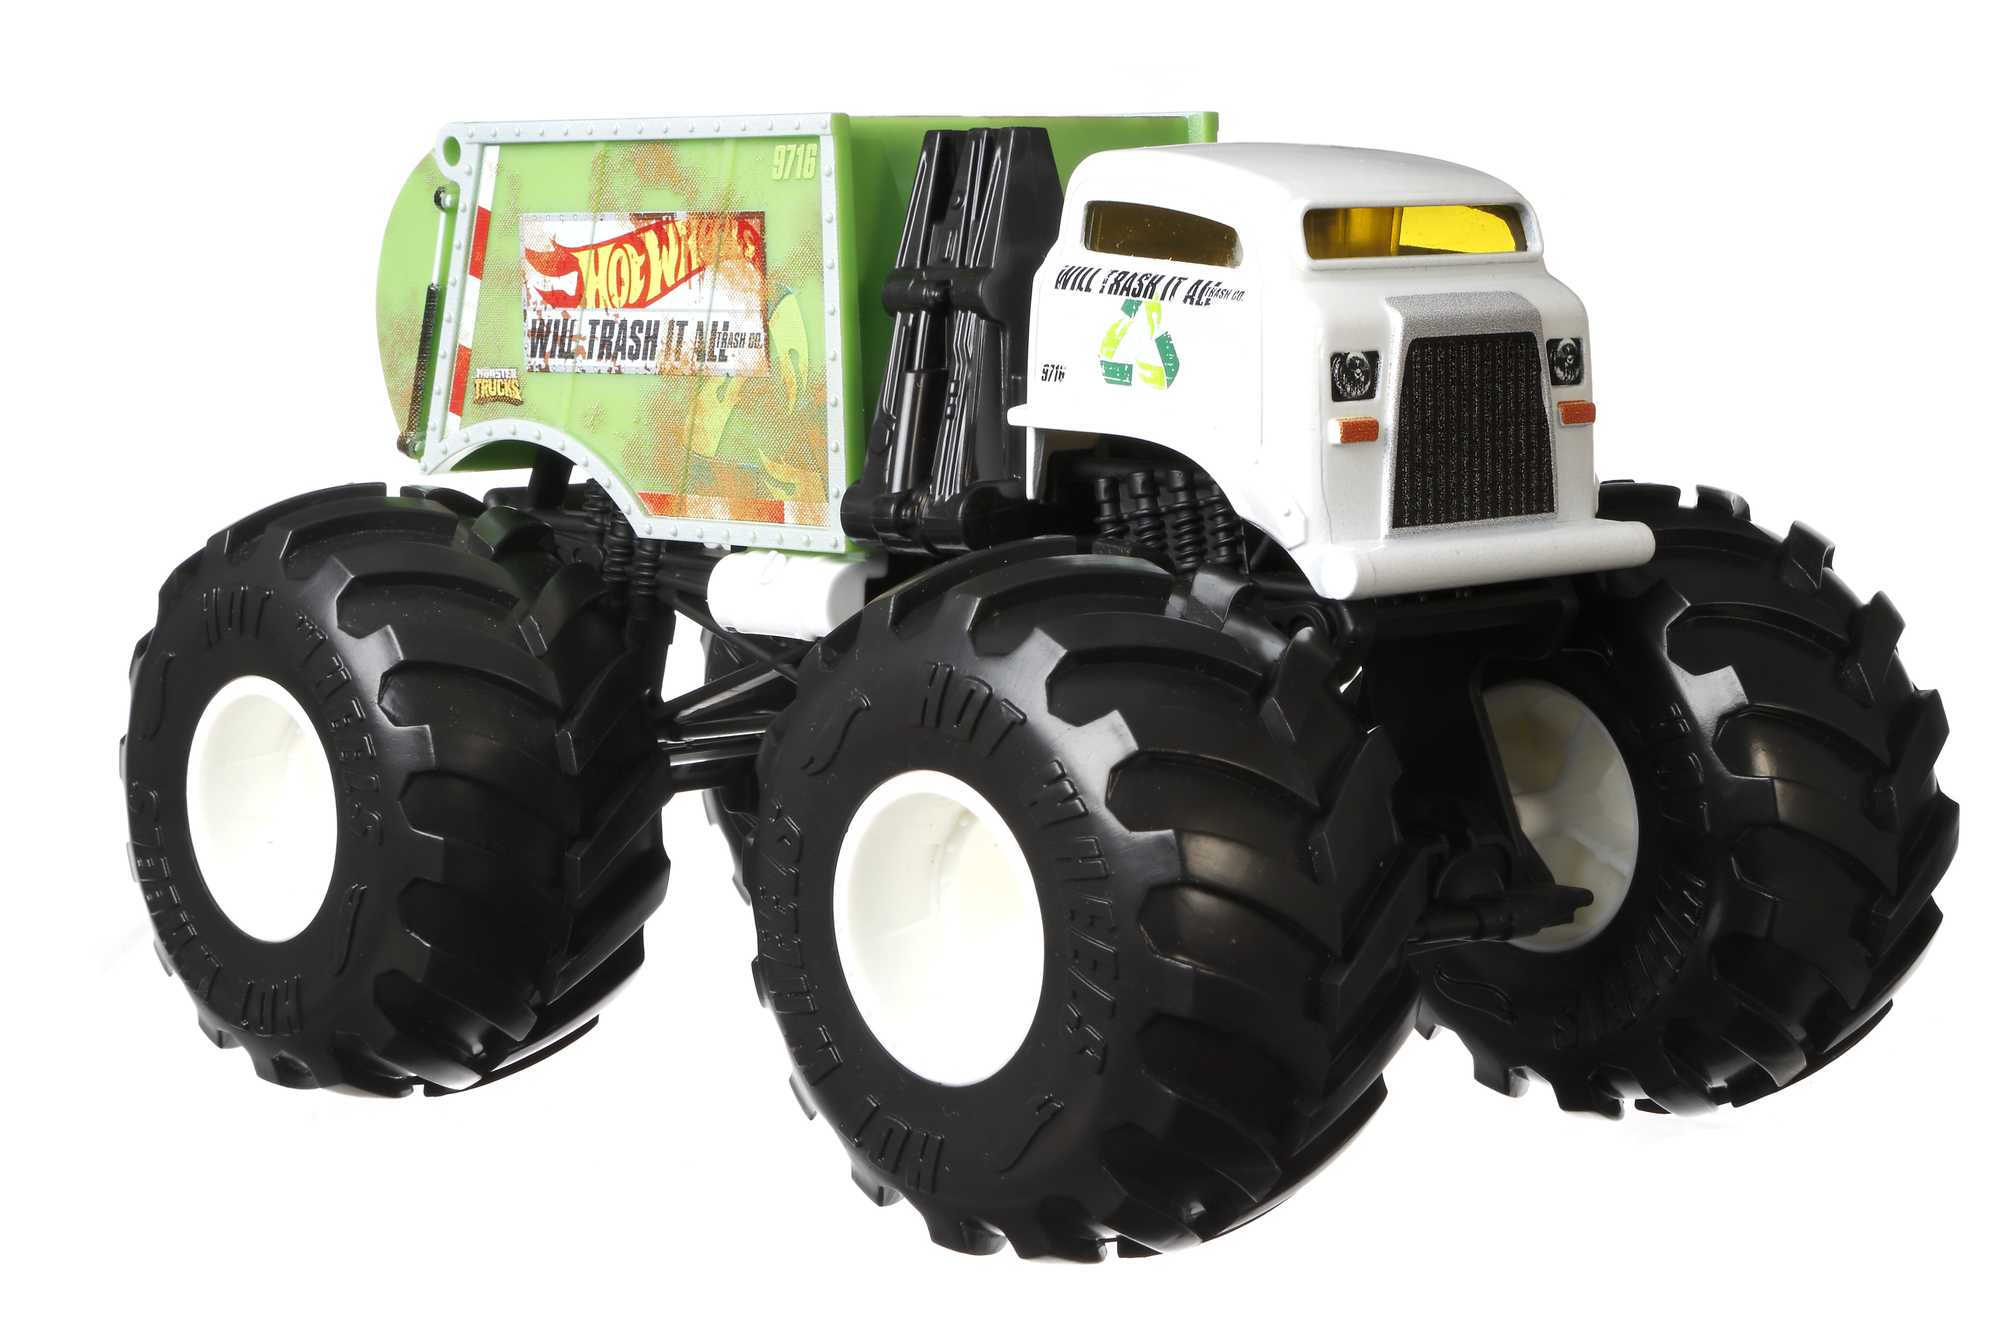 Mattel-Hot Wheels Monster Trucks Oversized - Will Trash It All-GWK99-Legacy Toys